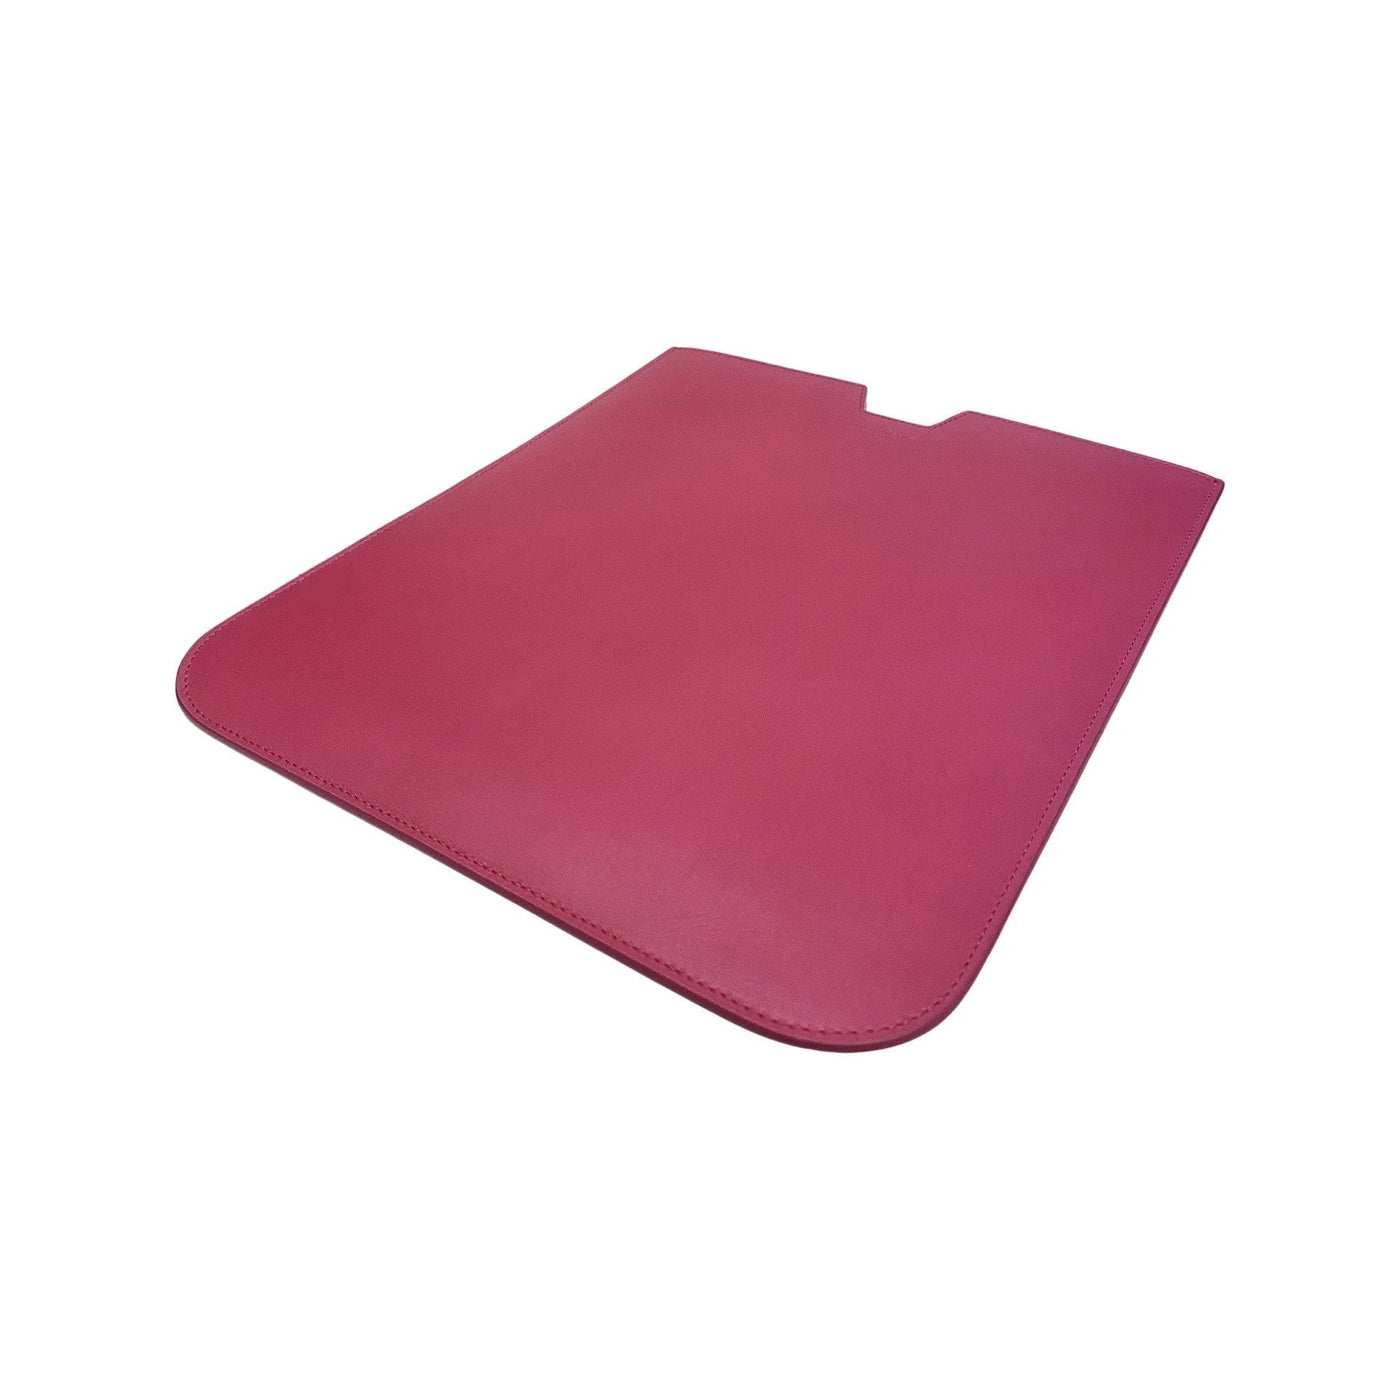 Saint Laurent Paris Logo Smooth Pink Calfskin Leather iPad Sleeve 460884 - LUXURYMRKT